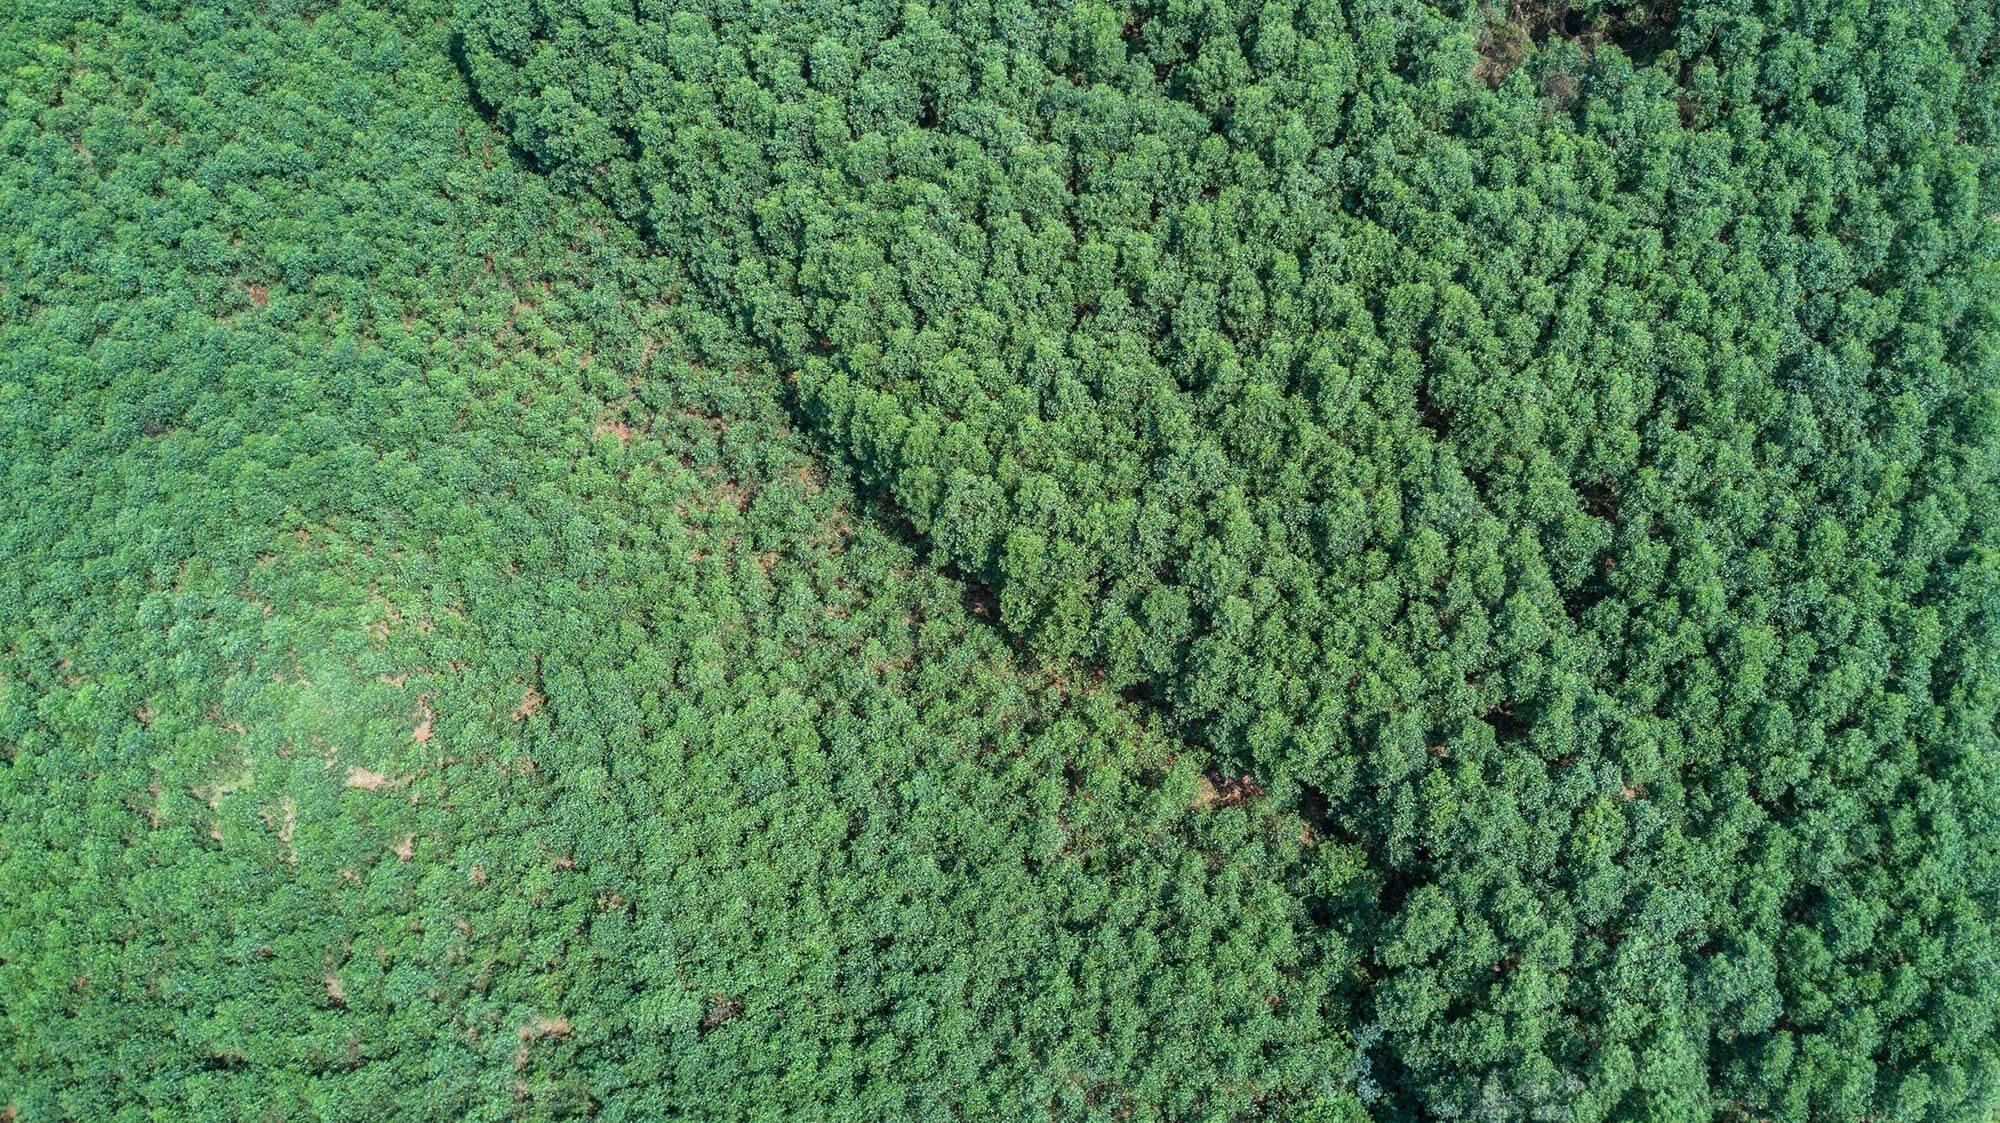 Acacia plantation seen from above